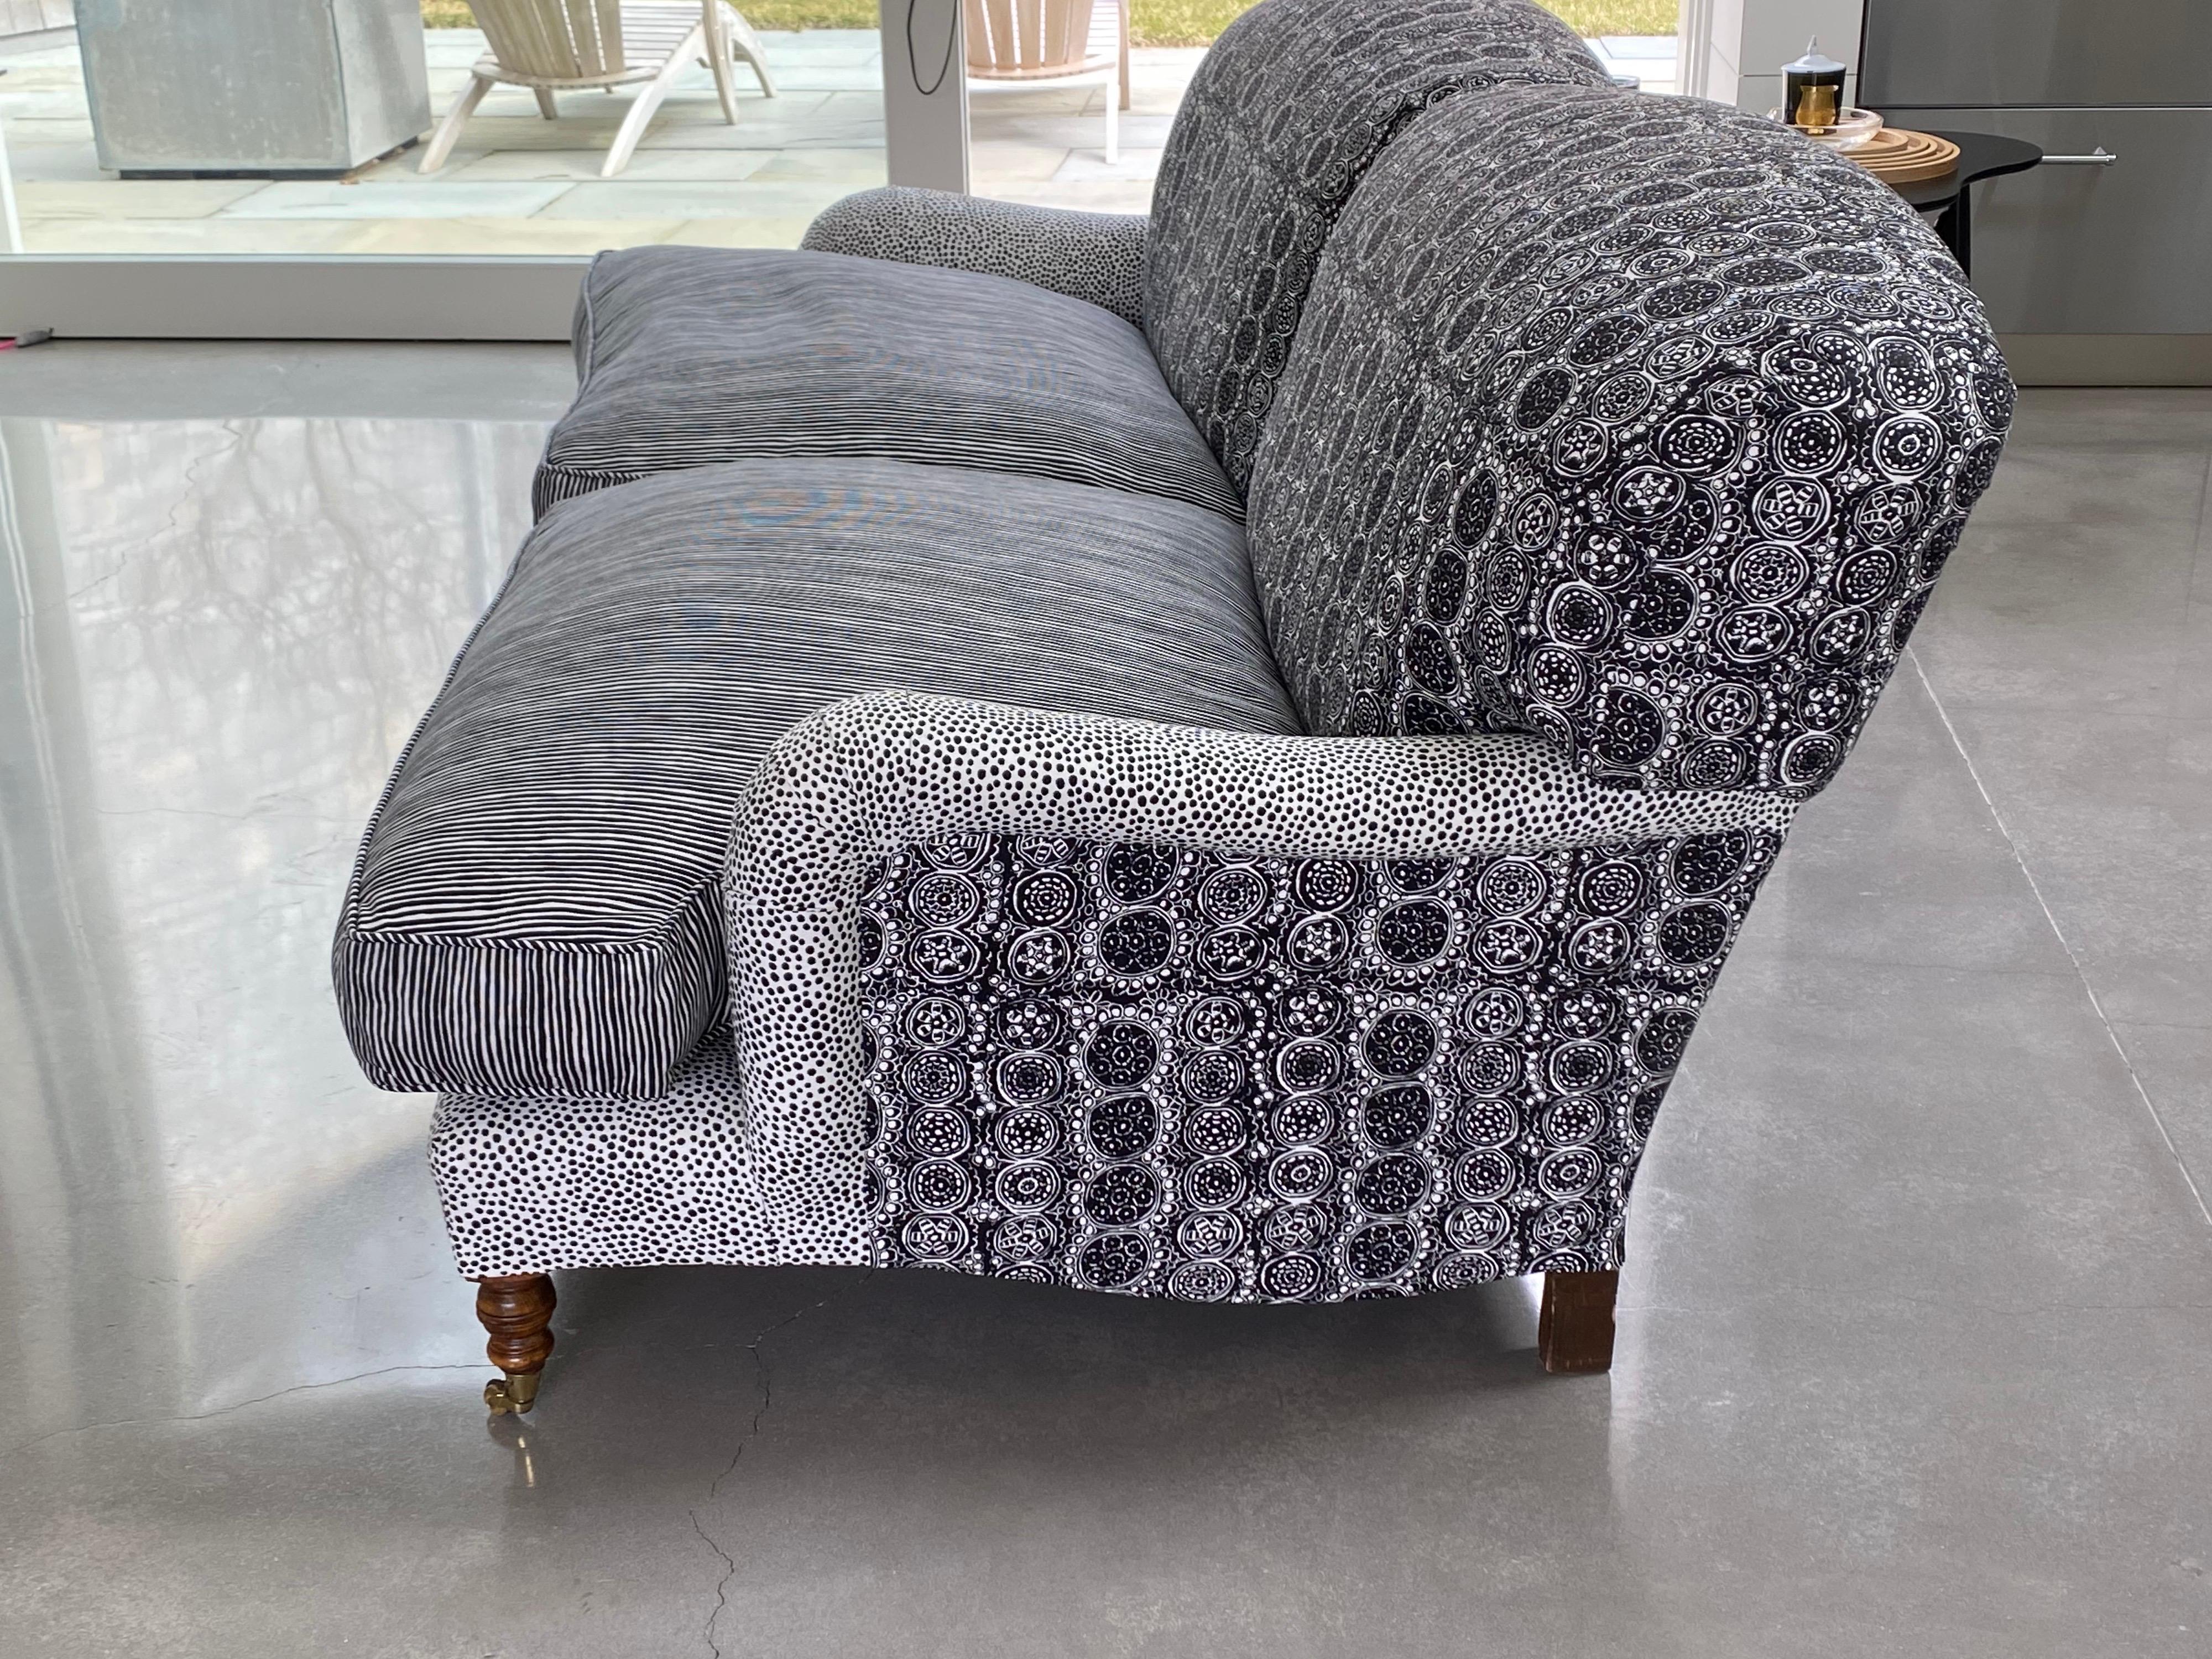 British George Sherlock Extended Two Seater Sofa Covered in Marimekko Fabrics